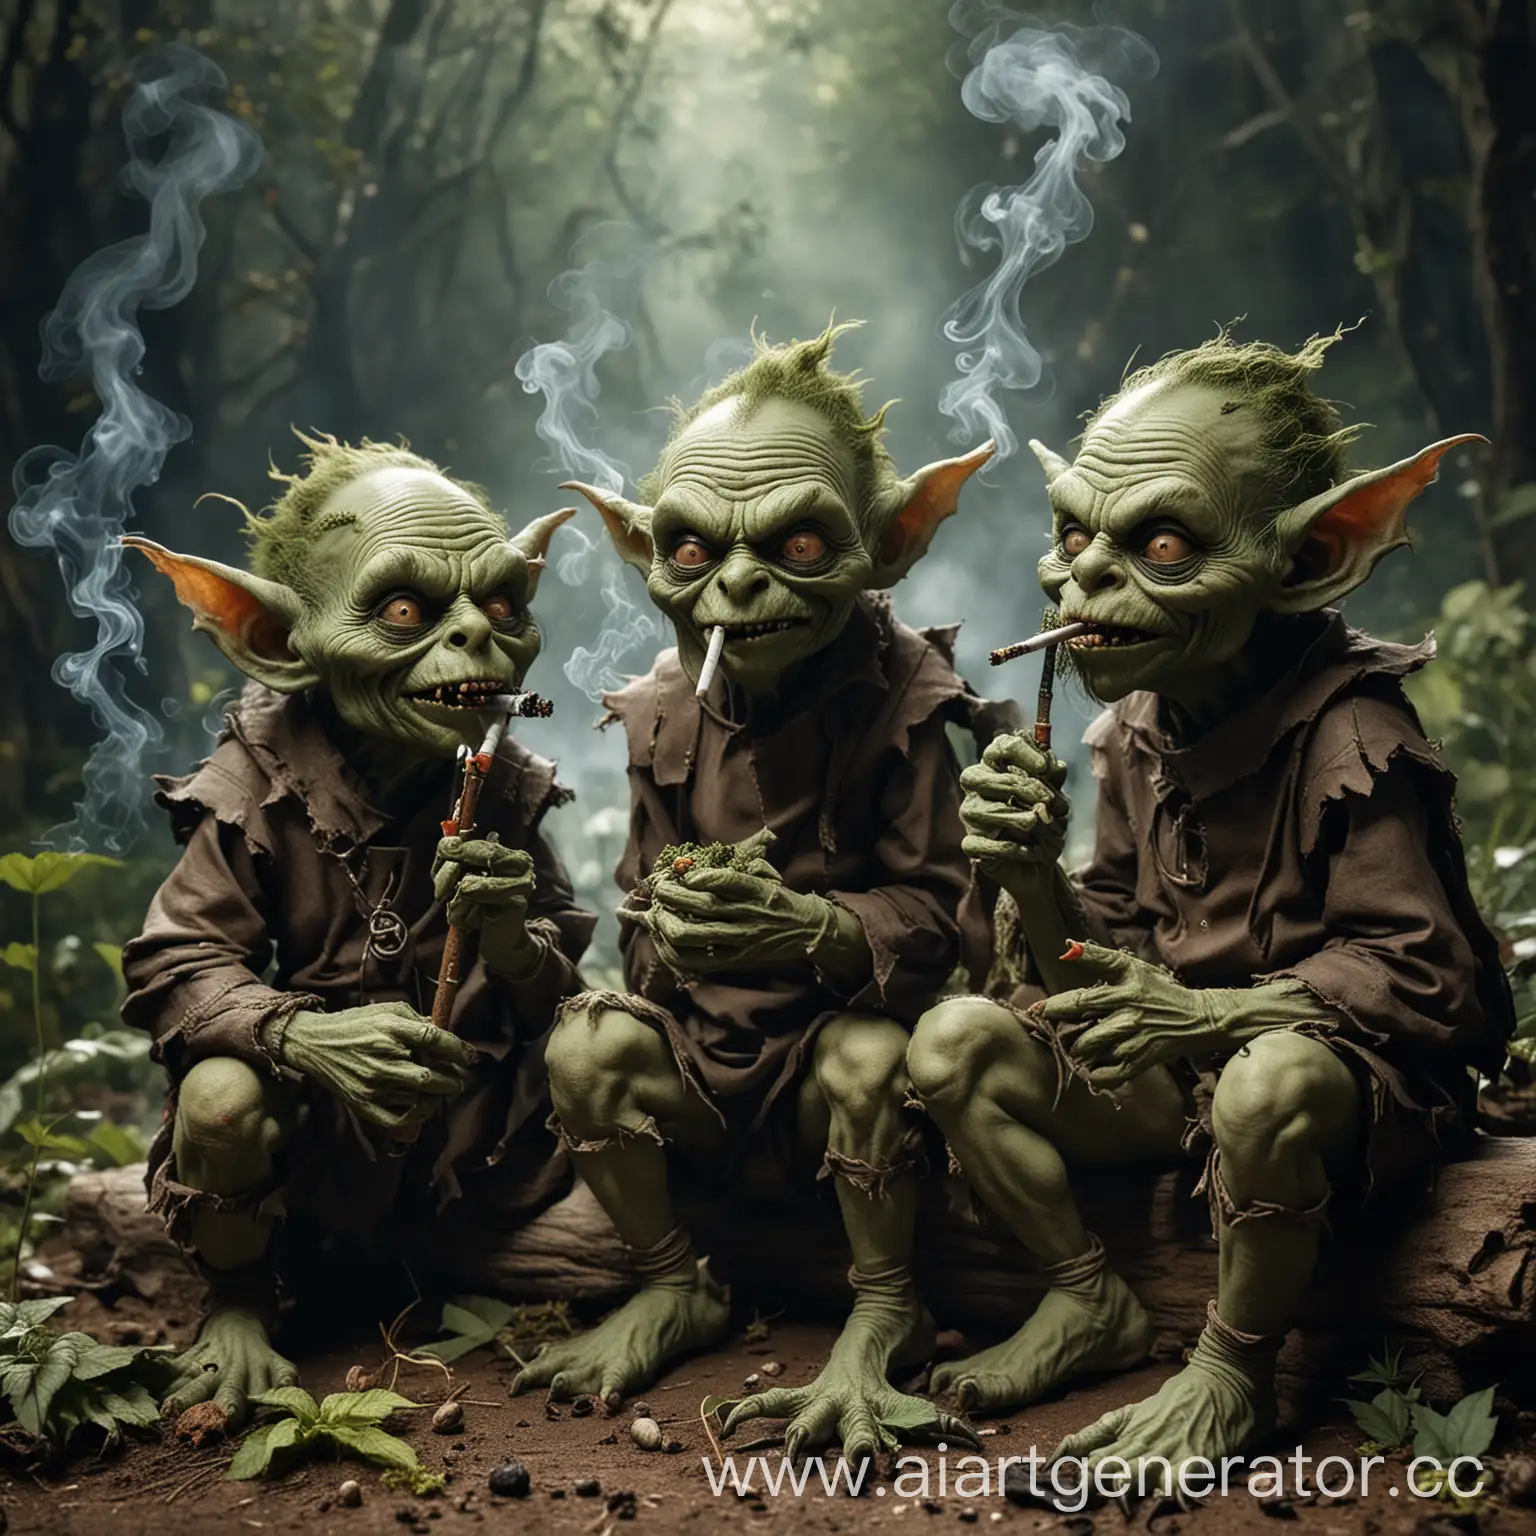 Mischievous-Goblins-Enjoying-a-Relaxing-Smoke-Session